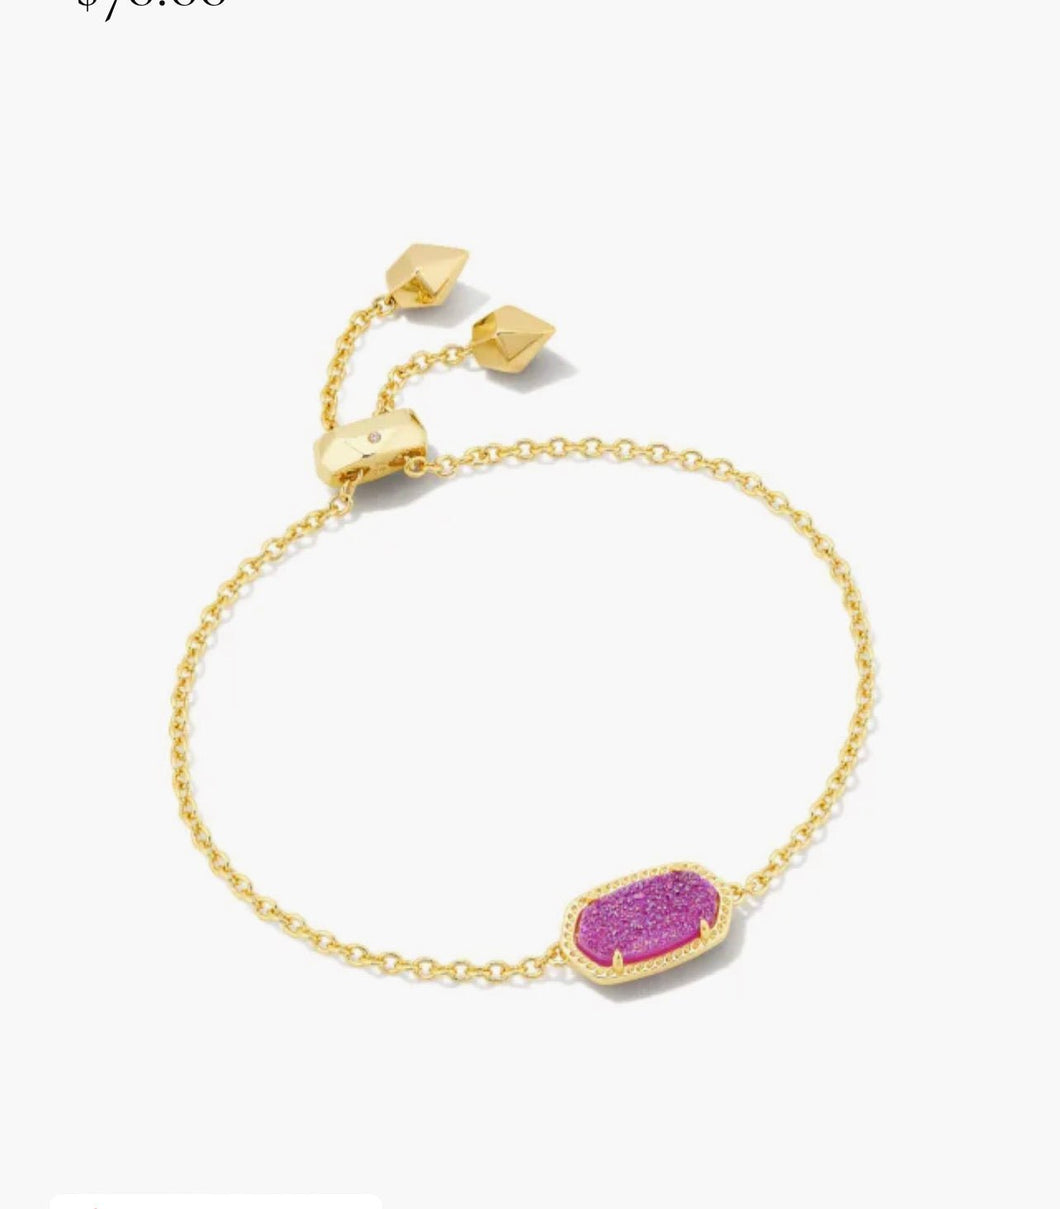 Kendra Scott-Elaina Gold Delicate Chain Bracelet in Mulberry Drusy 9608803731